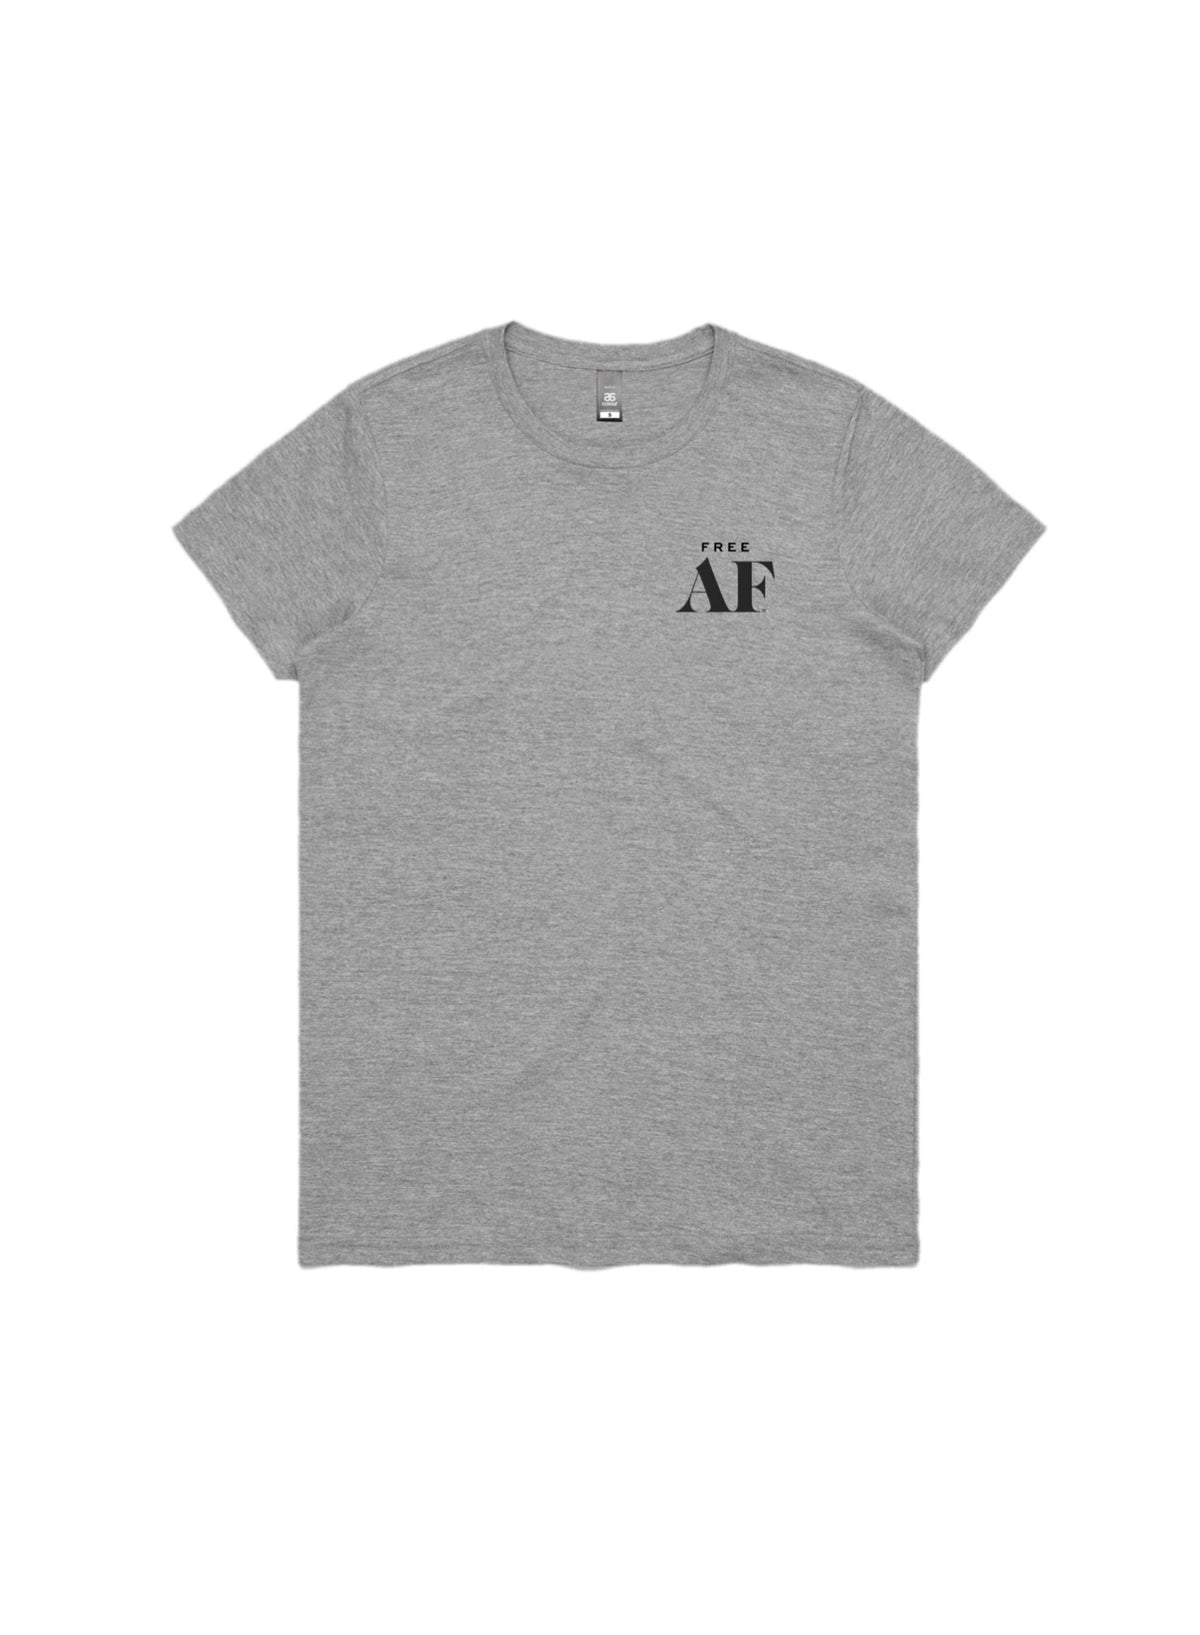 Free AF Women's T-Shirt